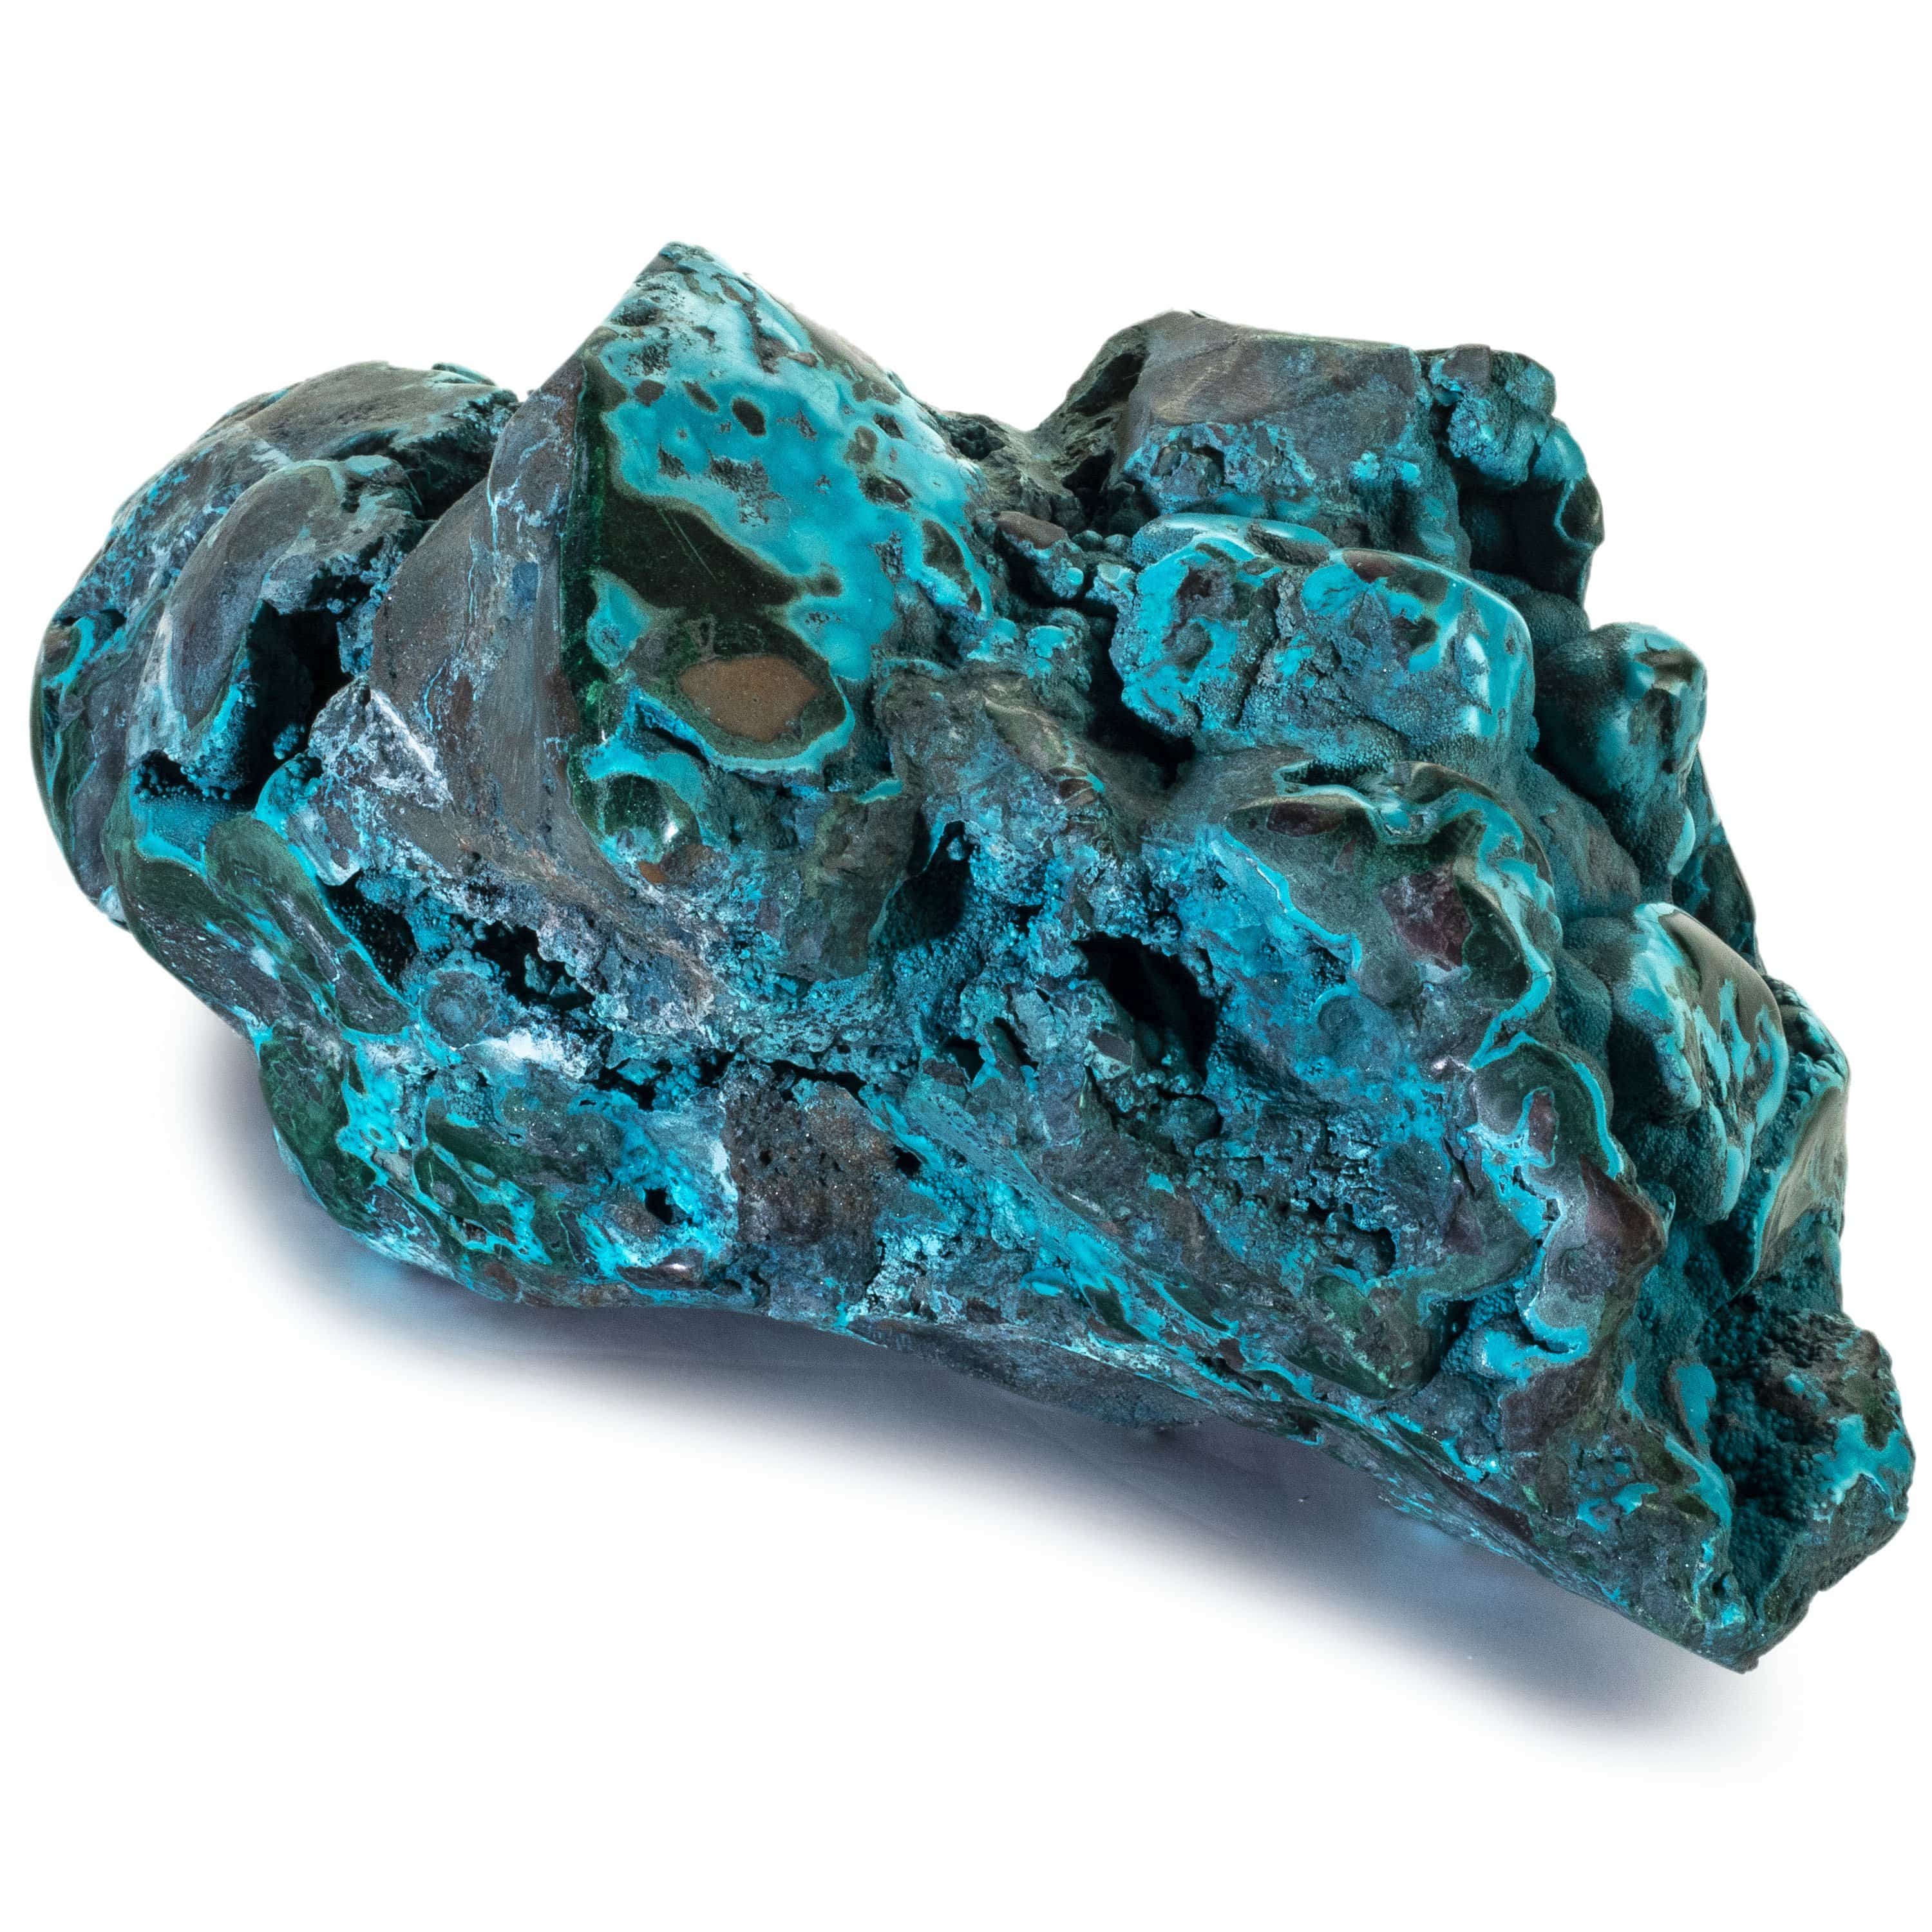 Kalifano Malachite Rare Natural Green Malachite with Blue Chrysocolla Freeform Specimen from Congo - 2.1 kg / 4.5 lbs MAC1800.001